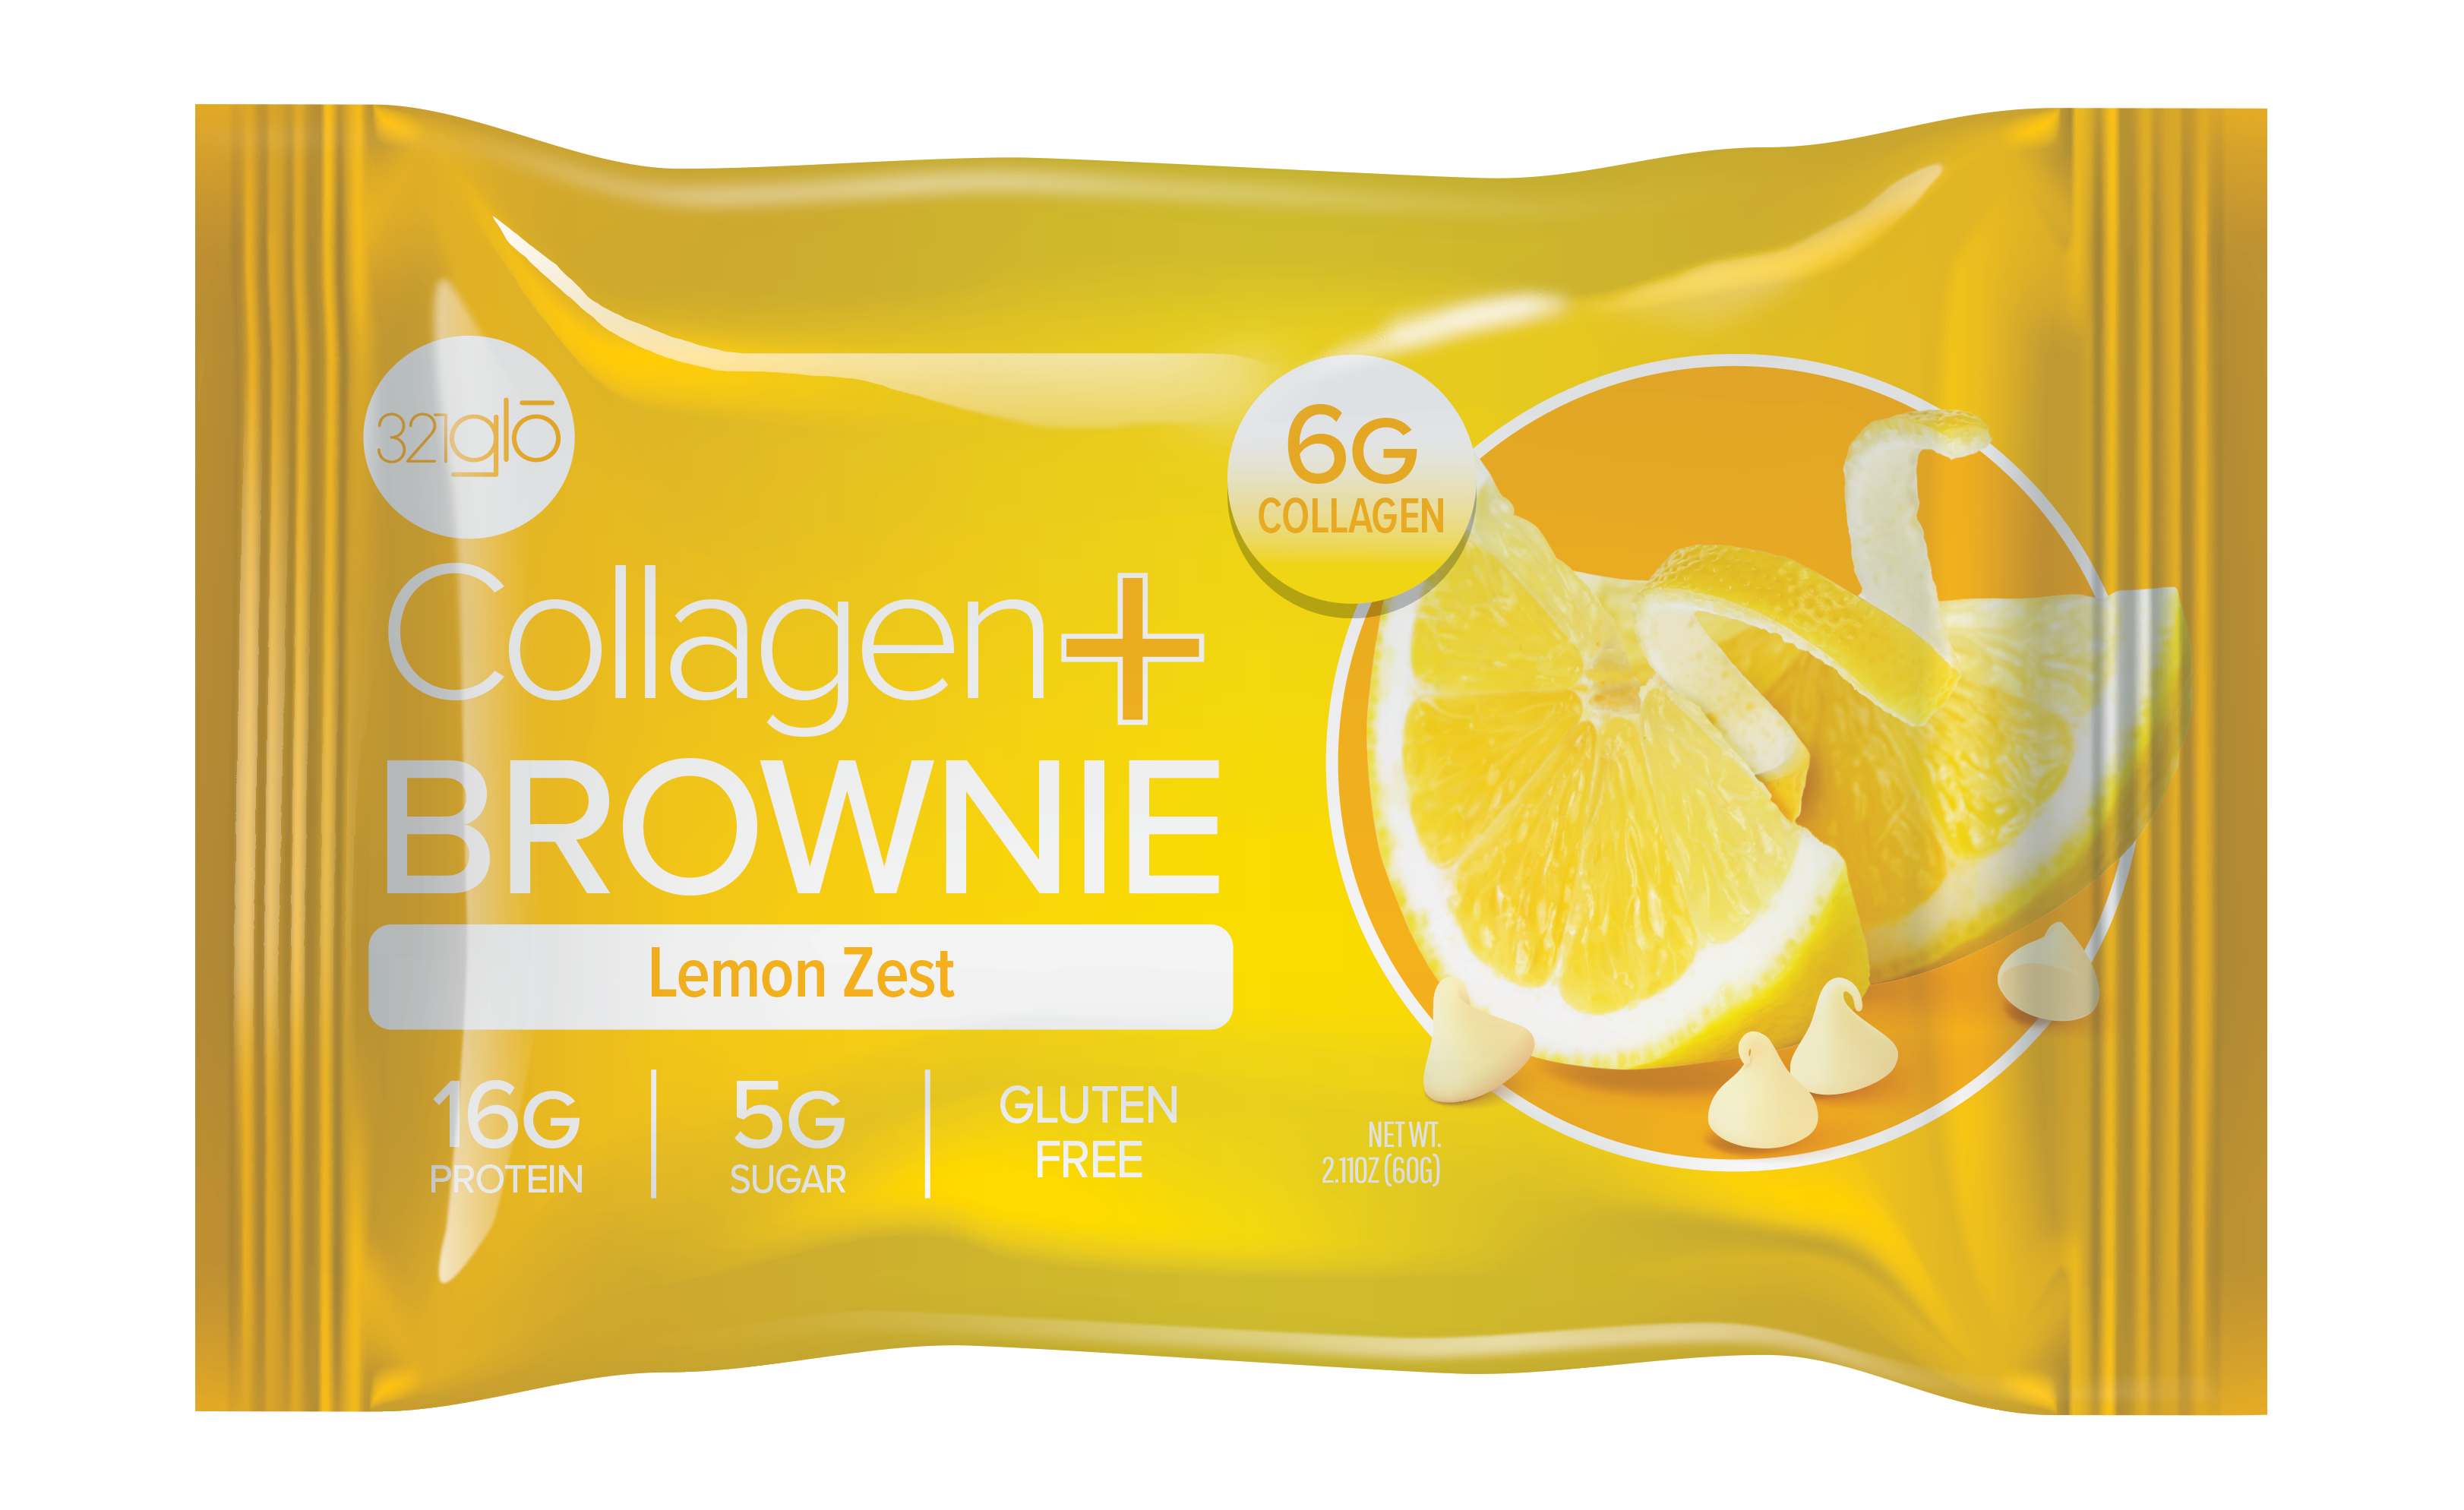 321Glo Collagen+Brownie - Lemon Zest